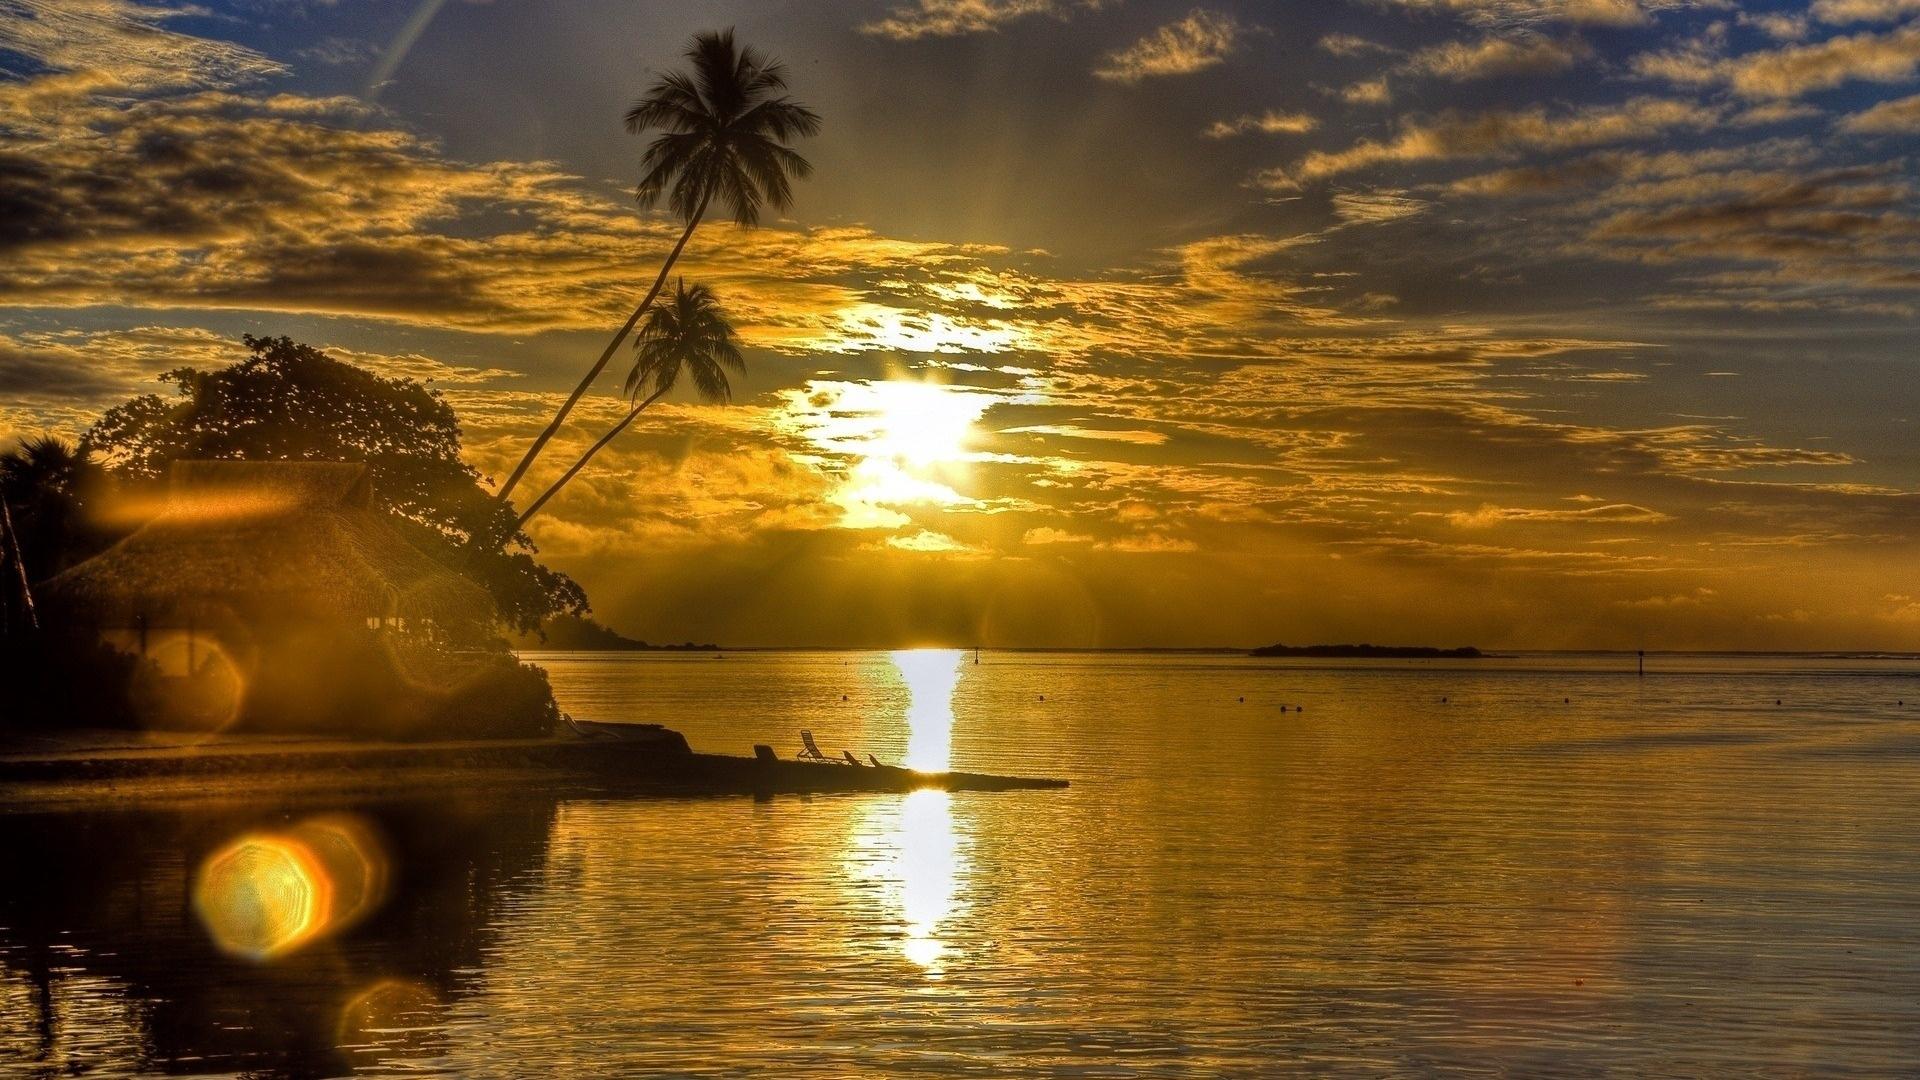 Download wallpaper 1920x1080 sun, sunset, reflections, palm, island